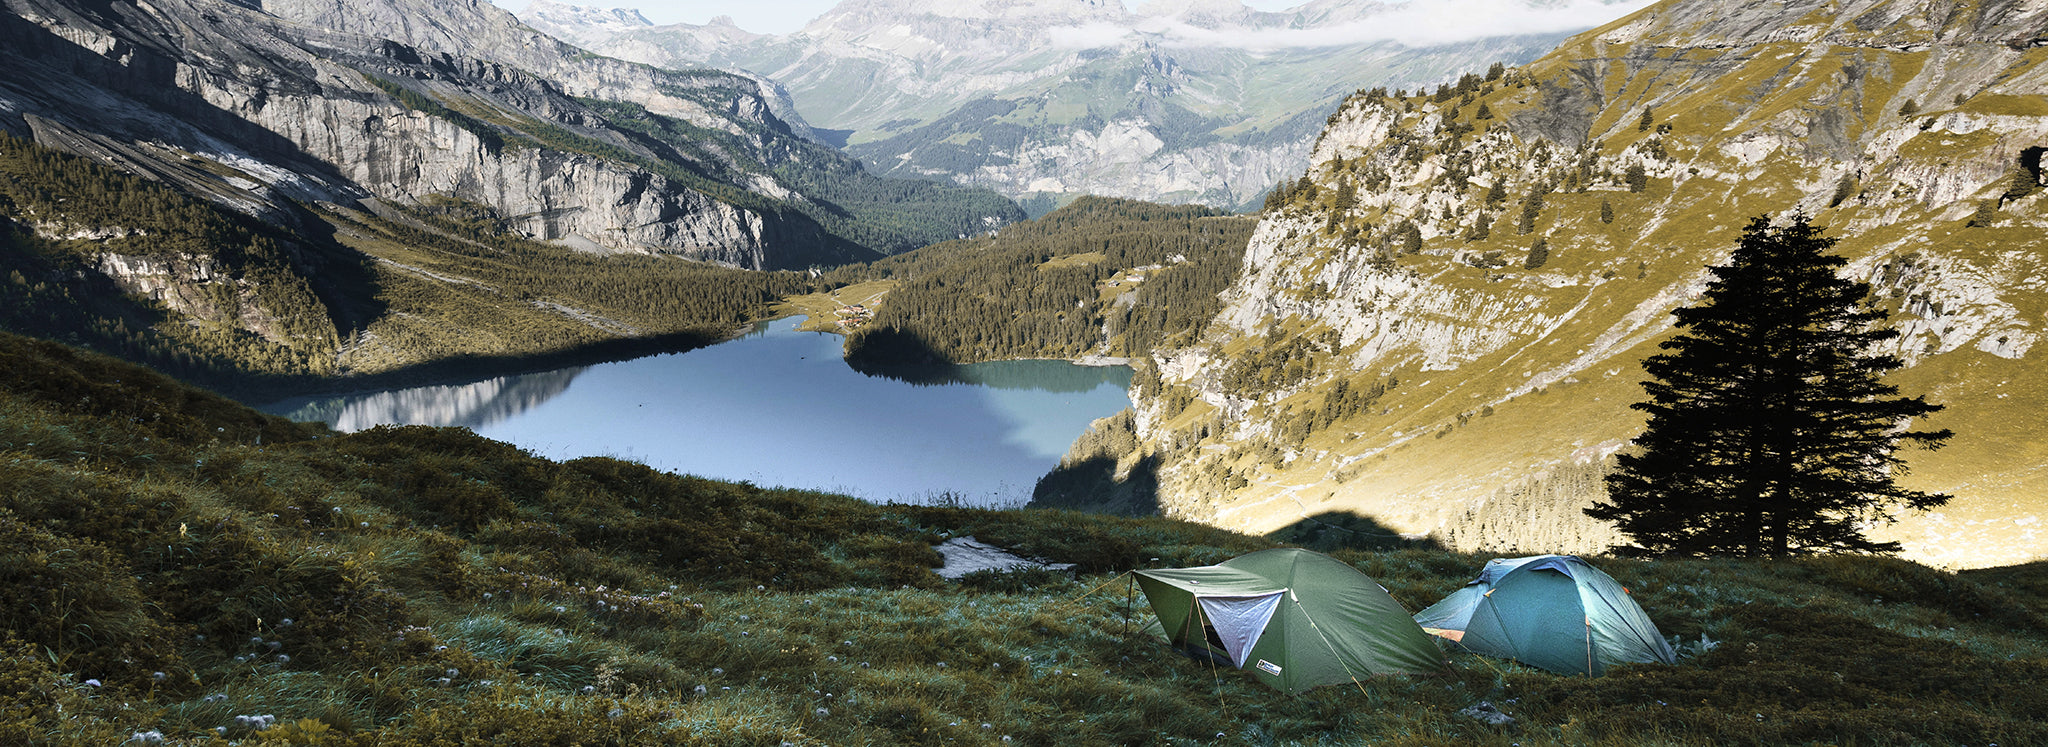 Bikepacking - Should you bring a tent, or just a tarp, or hammock?